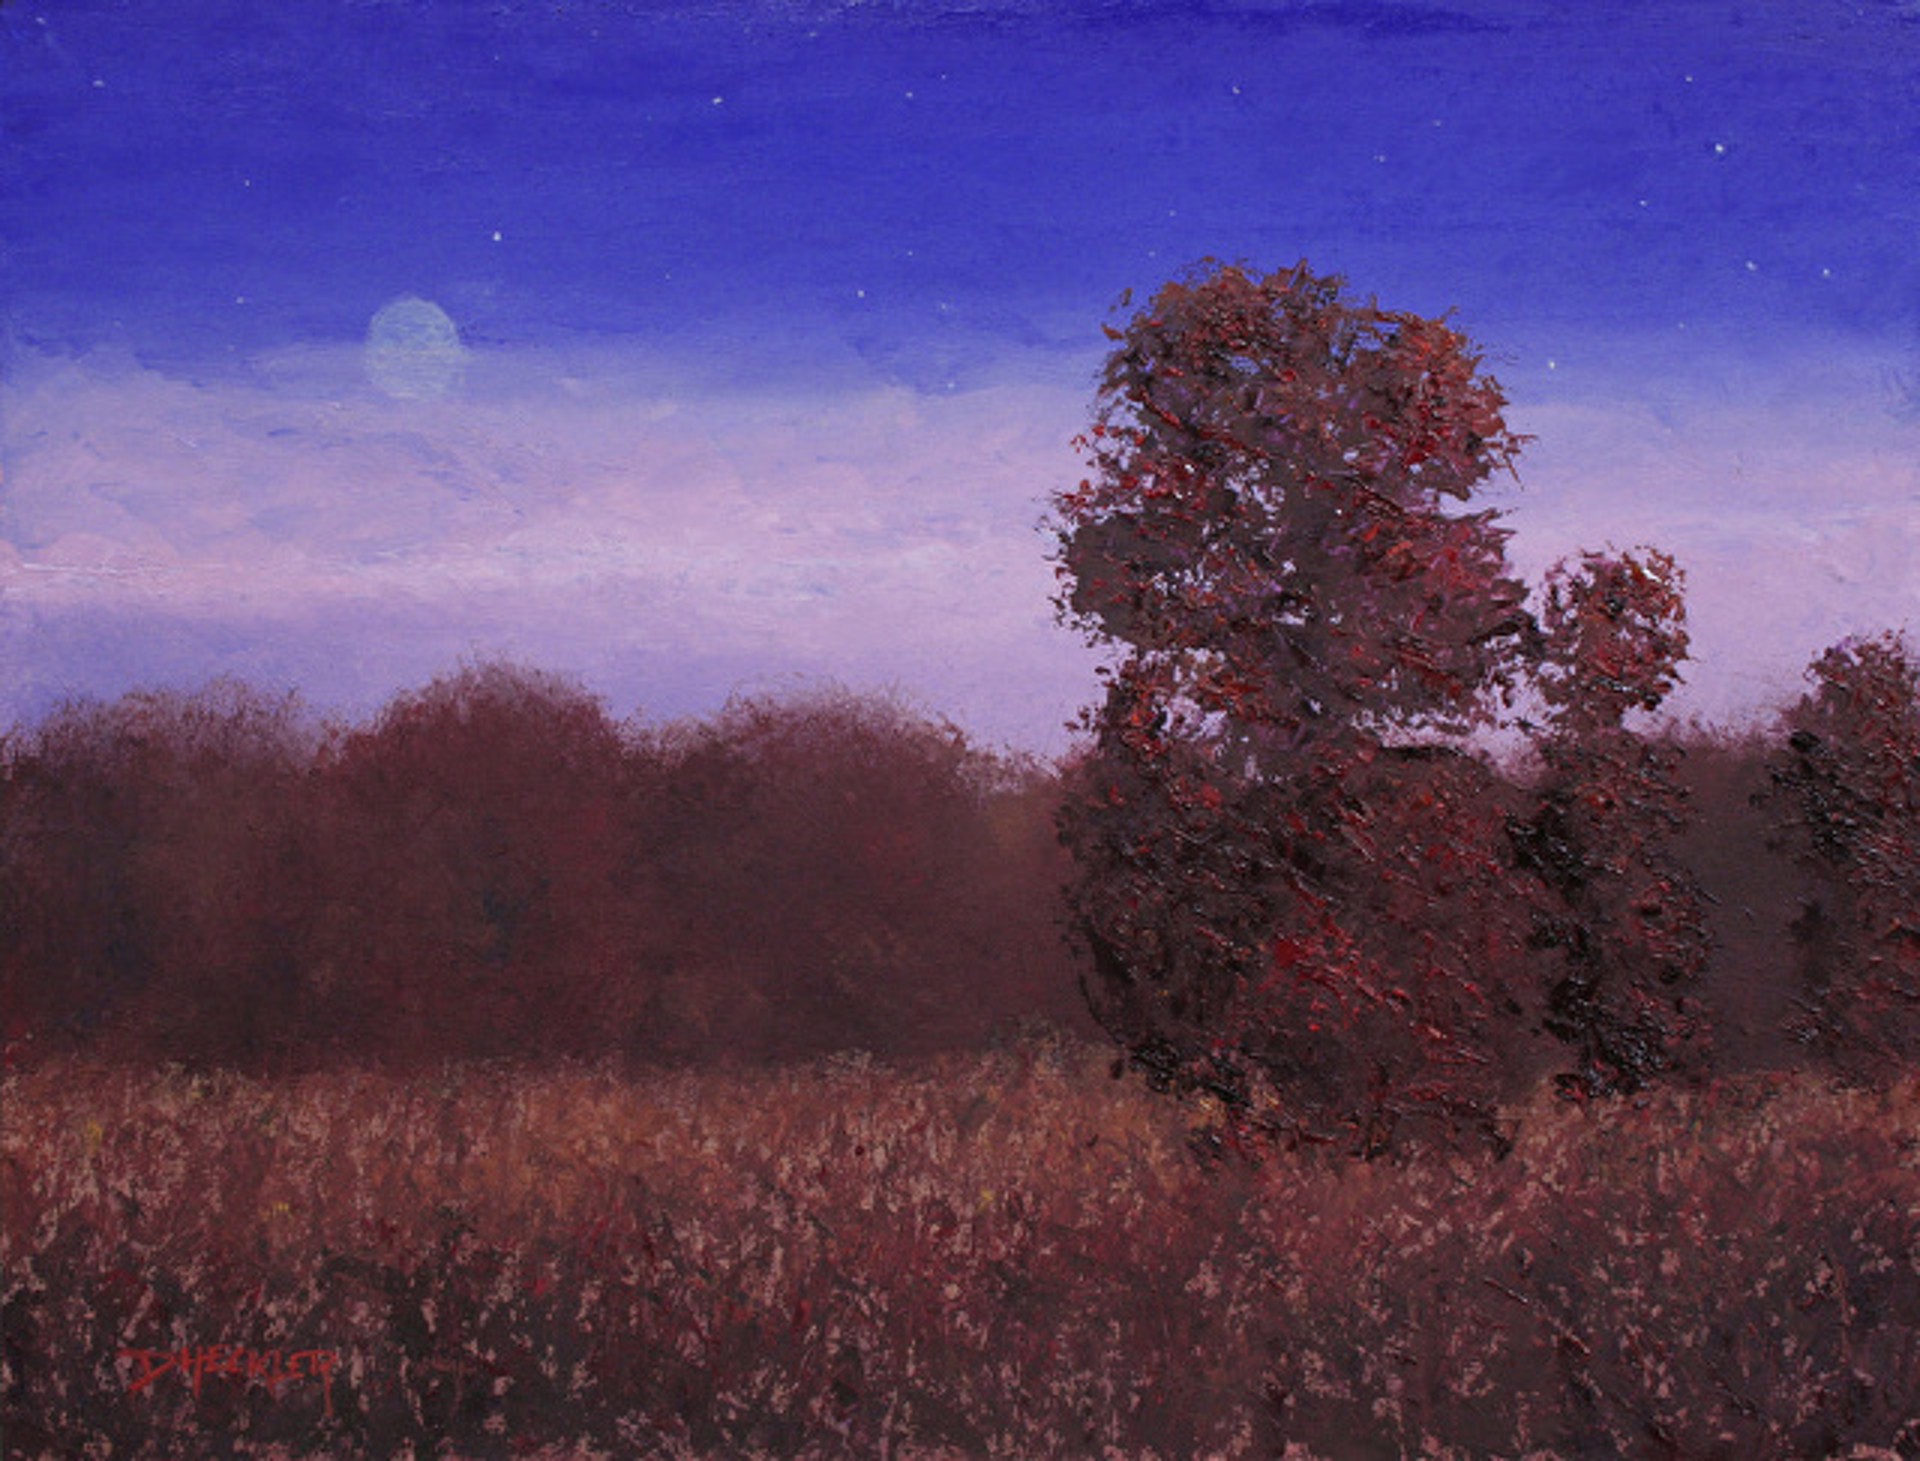 Moonlight Meadow by Dennis Heckler